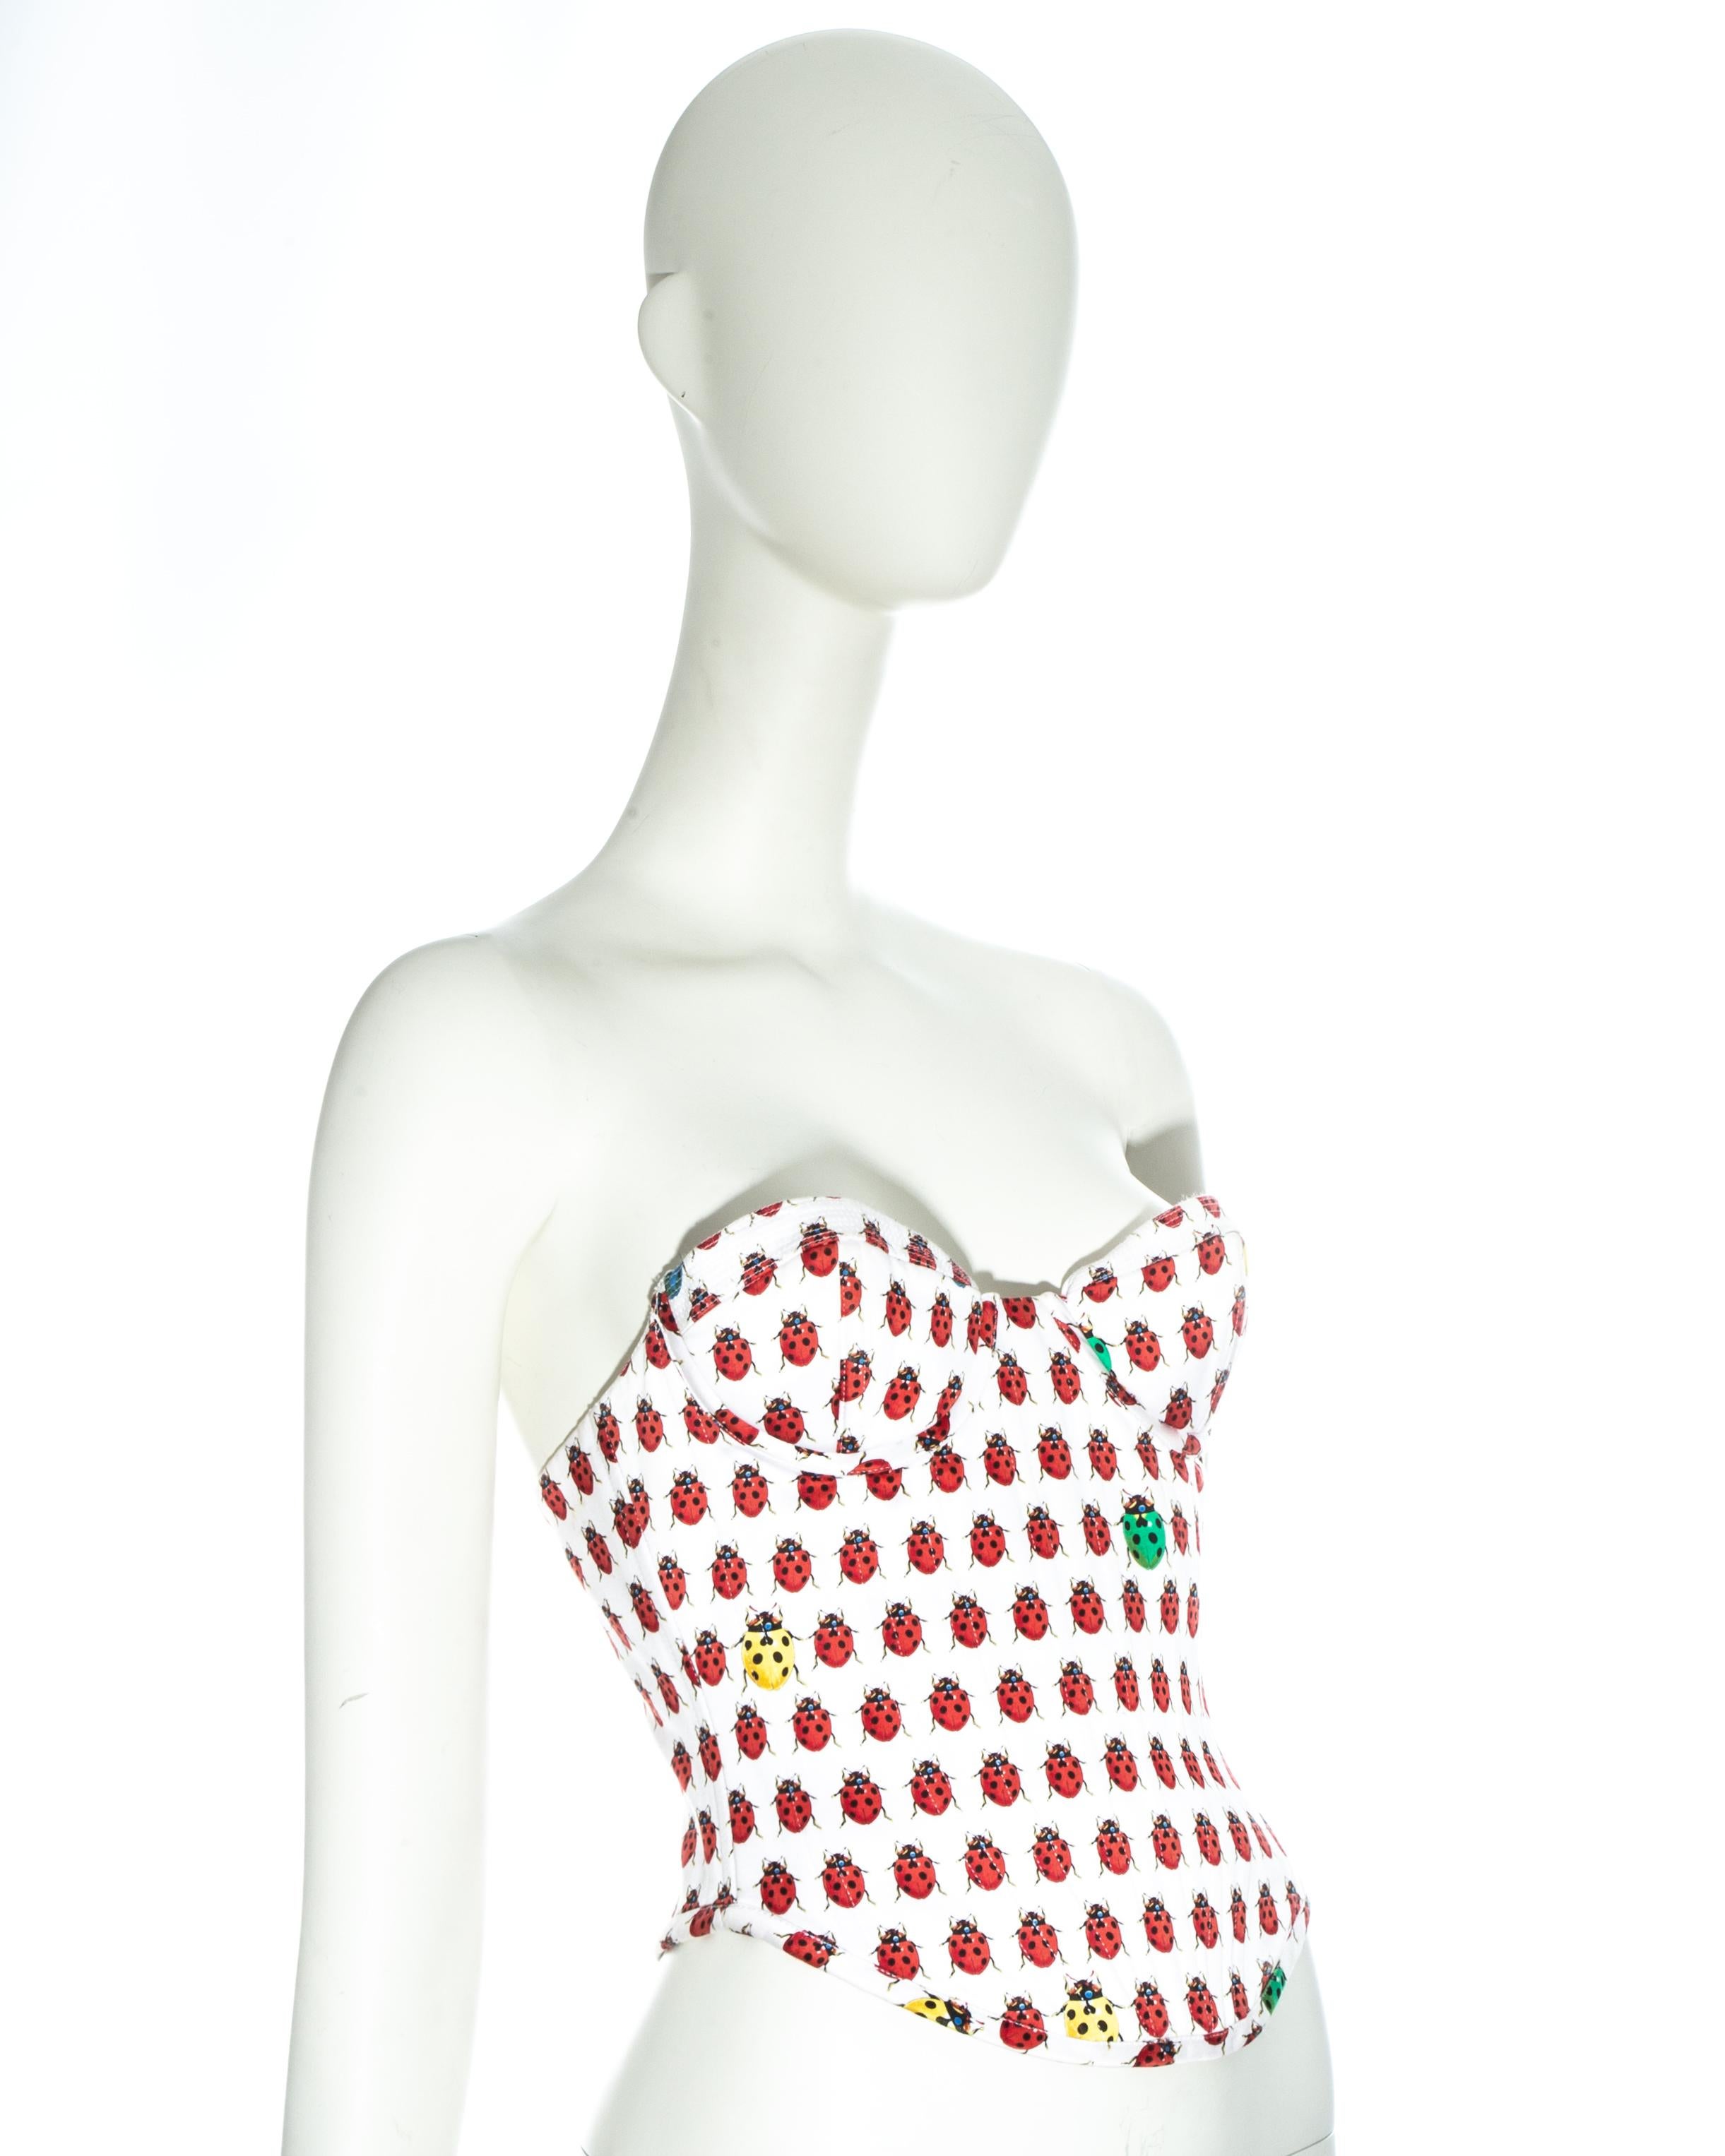 Gianni Versace ladybug printed silk bustier corset

Spring-Summer 1995